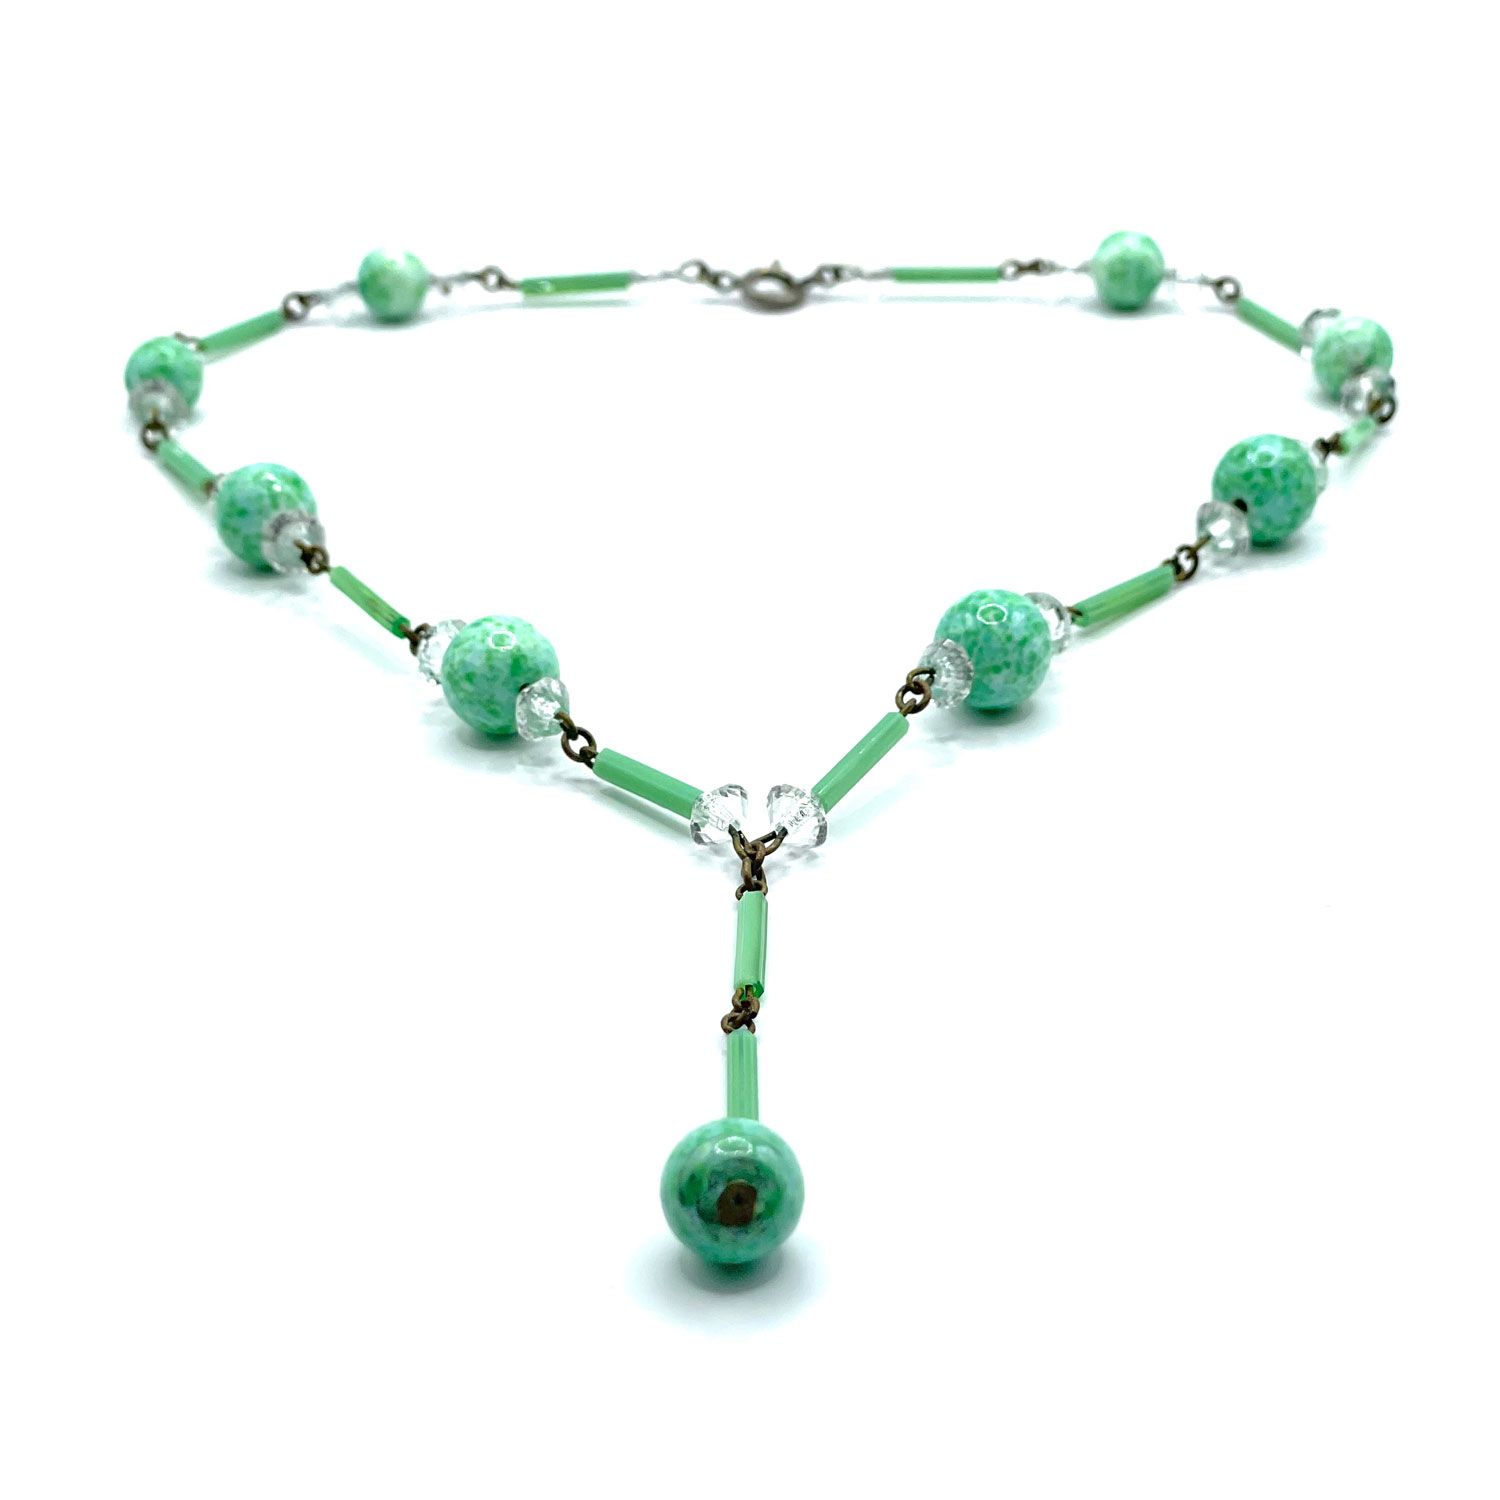 1920s Art Deco Peking glass pendant necklace